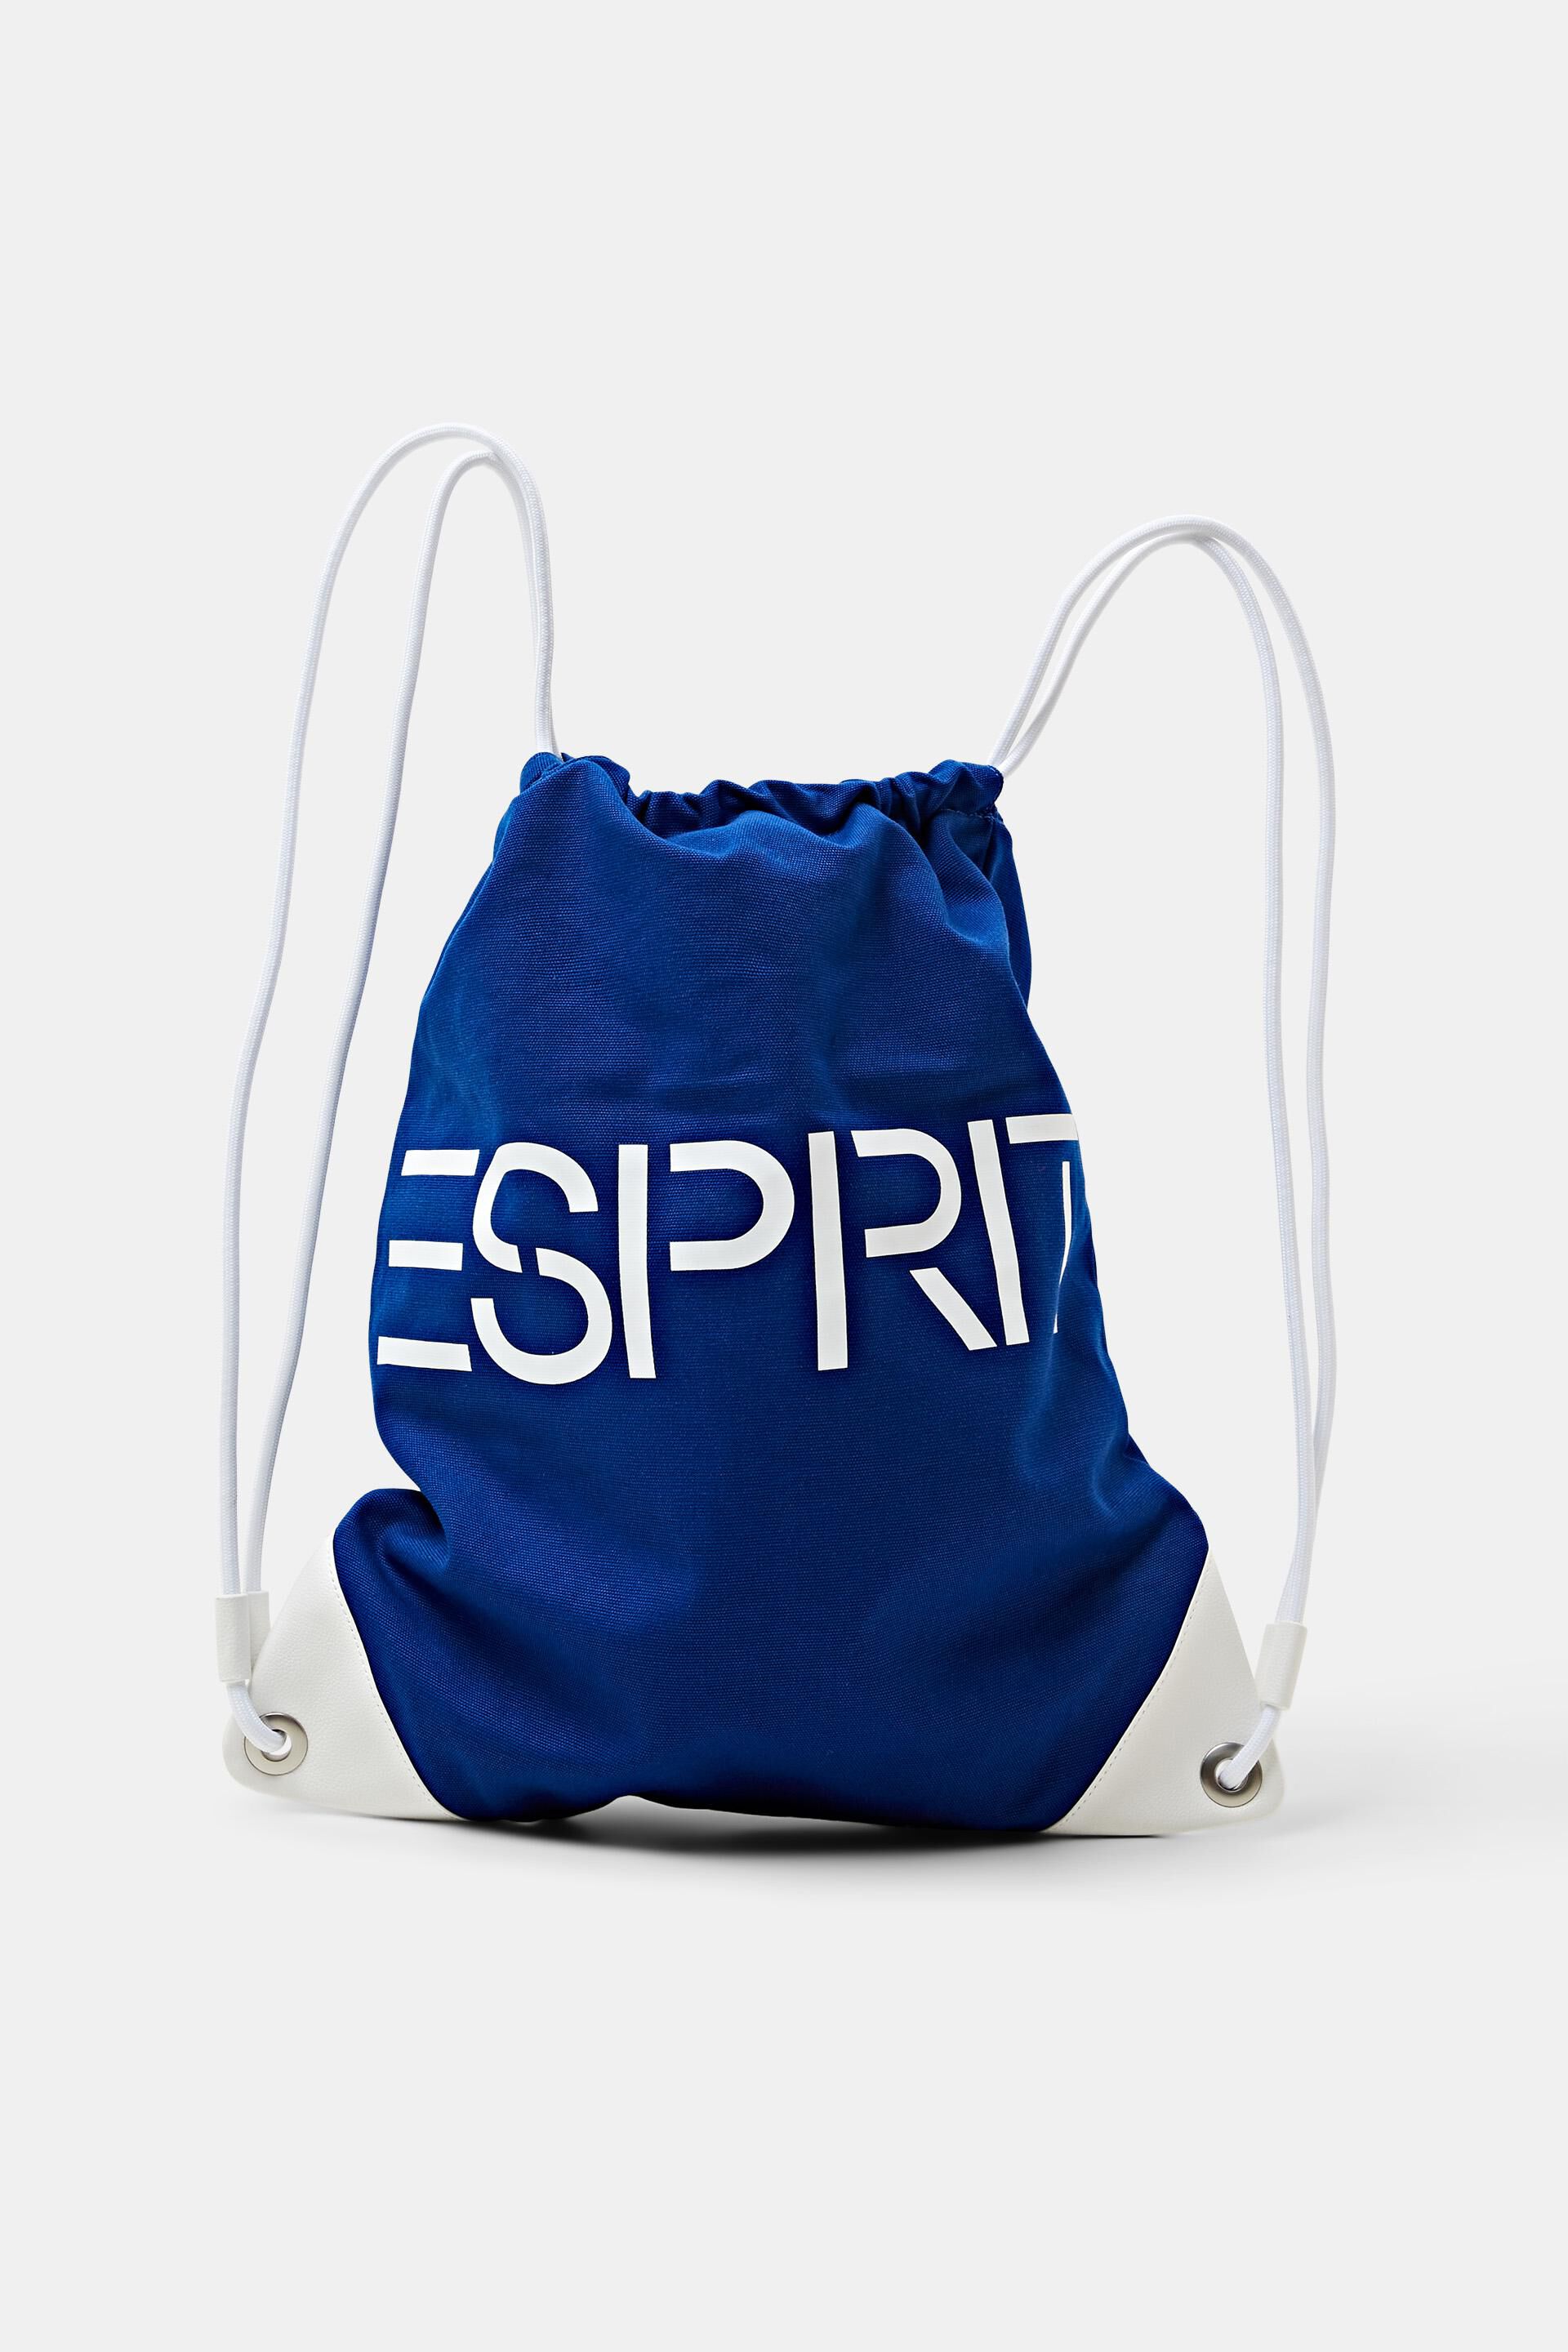 Esprit Backpack Cotton Logo Drawstring Canvas